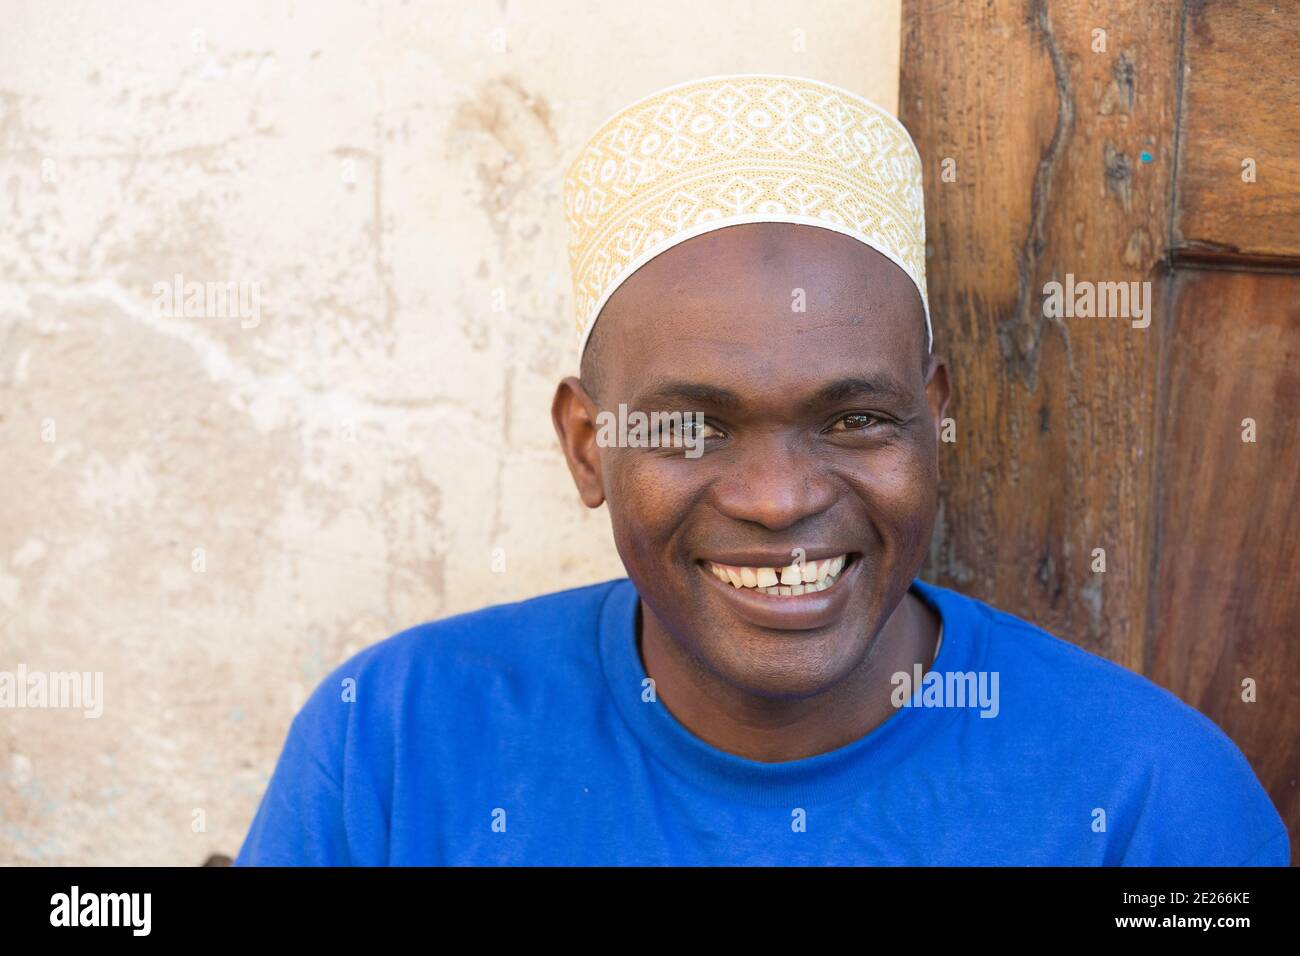 Stone Town, Zanzibar, Tanzania : Portrait of Man Wearing Kofia hat. Stock Photo